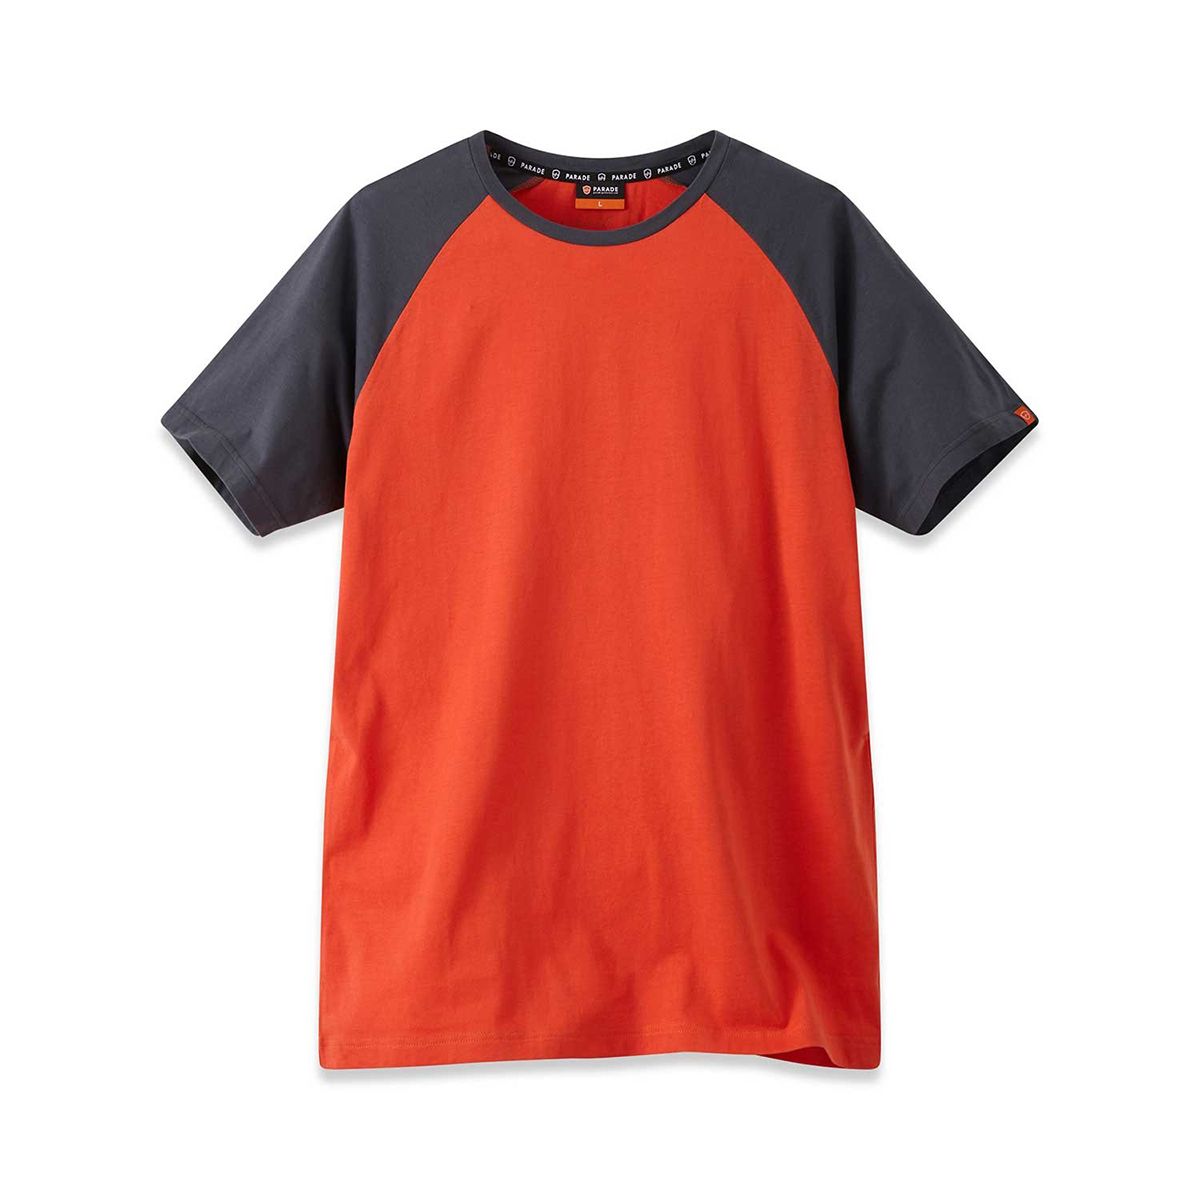 Parade Orange Cotton Short Sleeve T-Shirt, UK- L, EUR- L